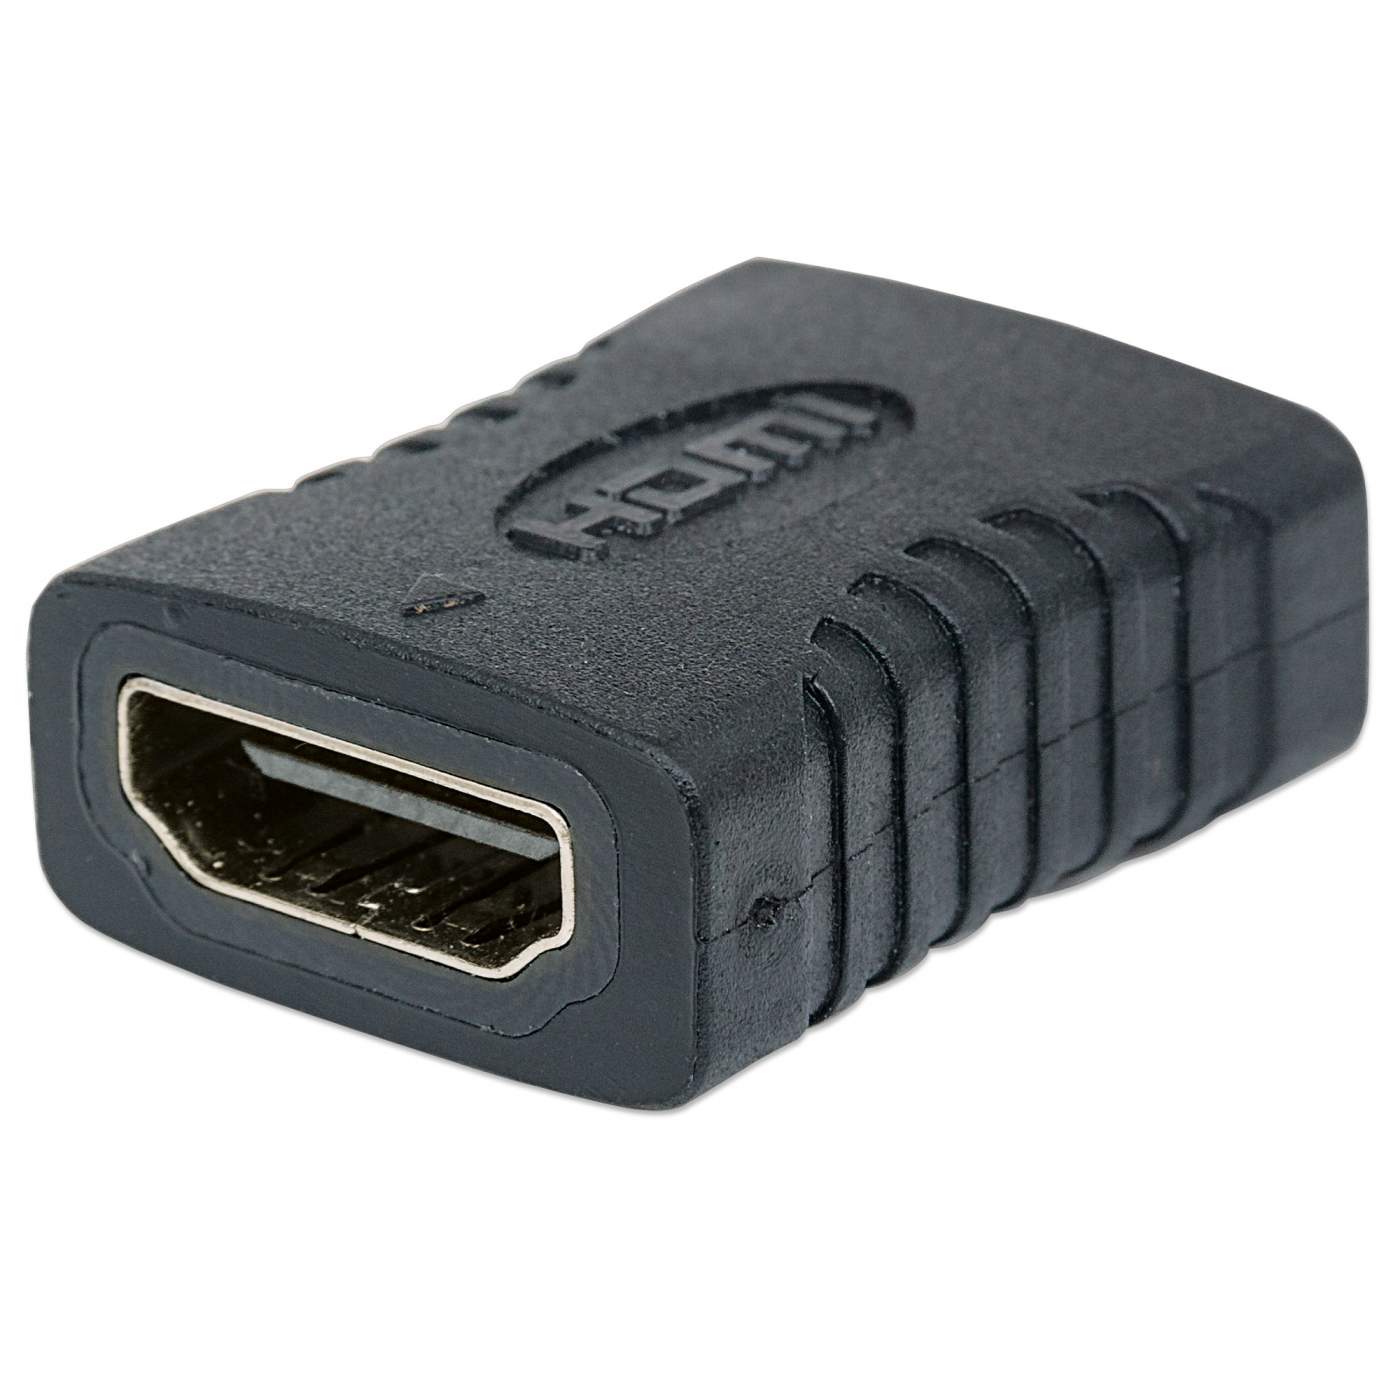 HDMI Coupler Image 1